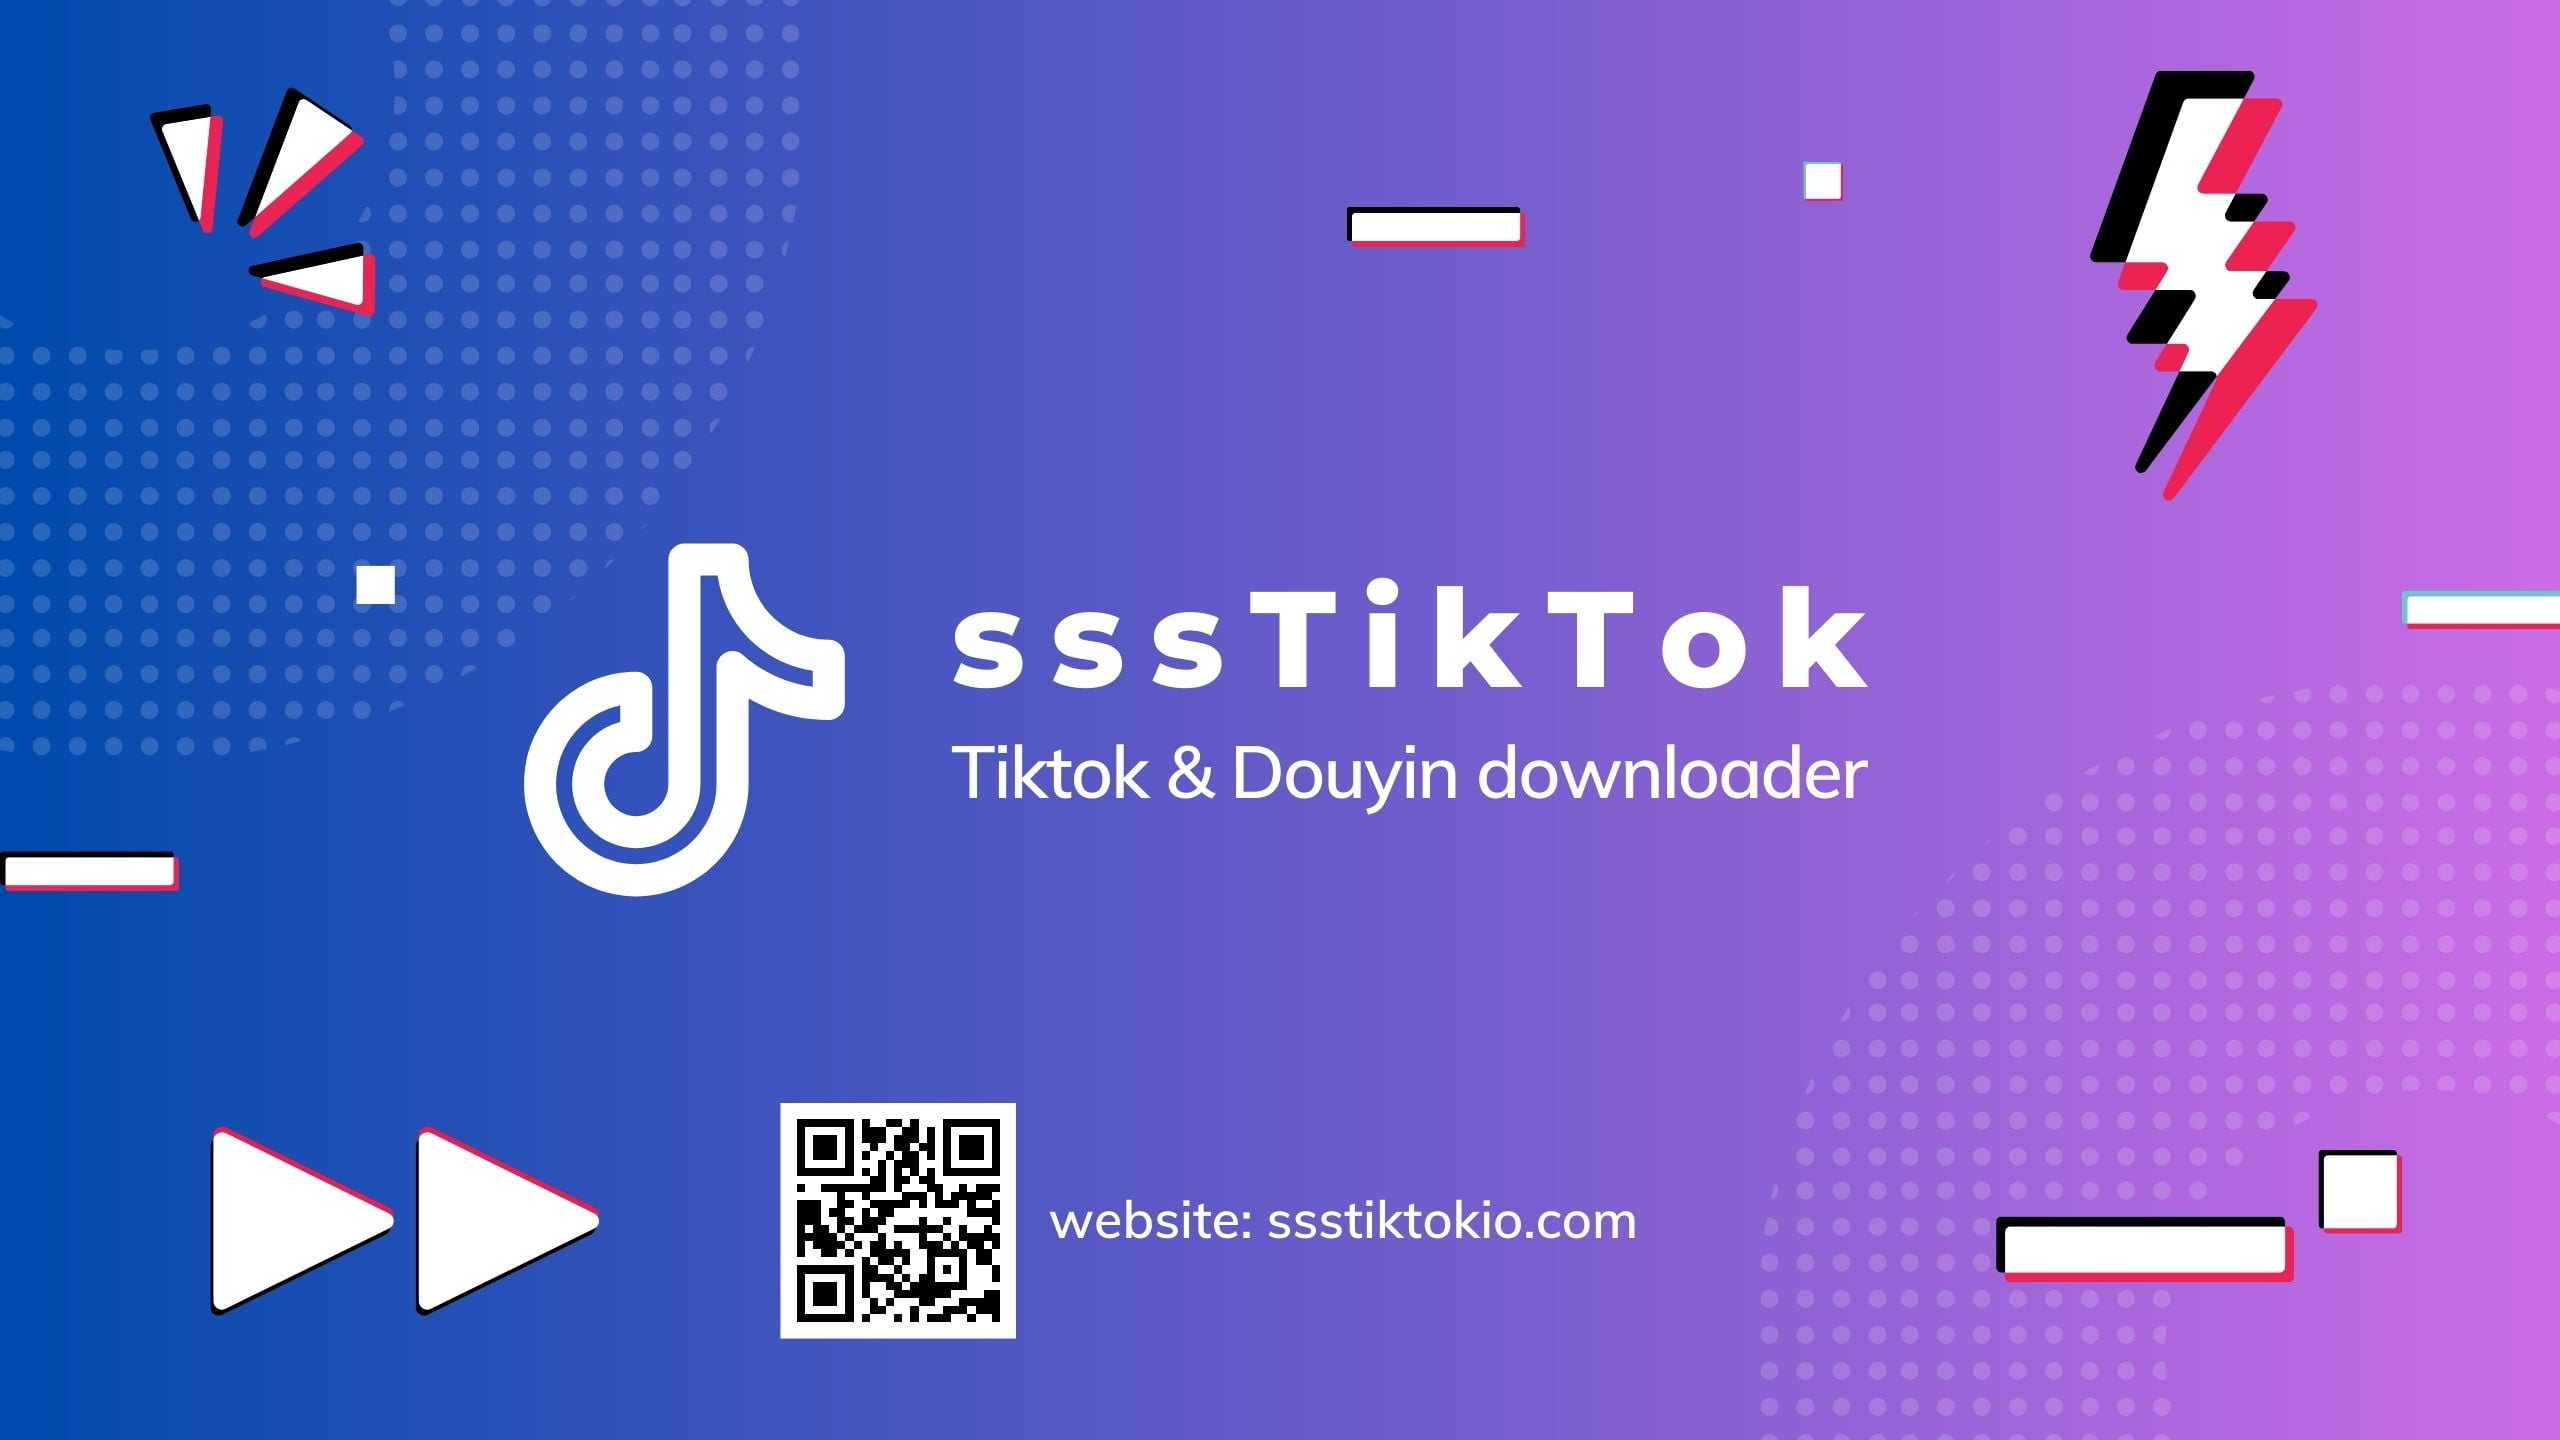 sssTiktok - Tiktok Downloader Online - Baixar vídeos Tiktok sem marca d'água grátis